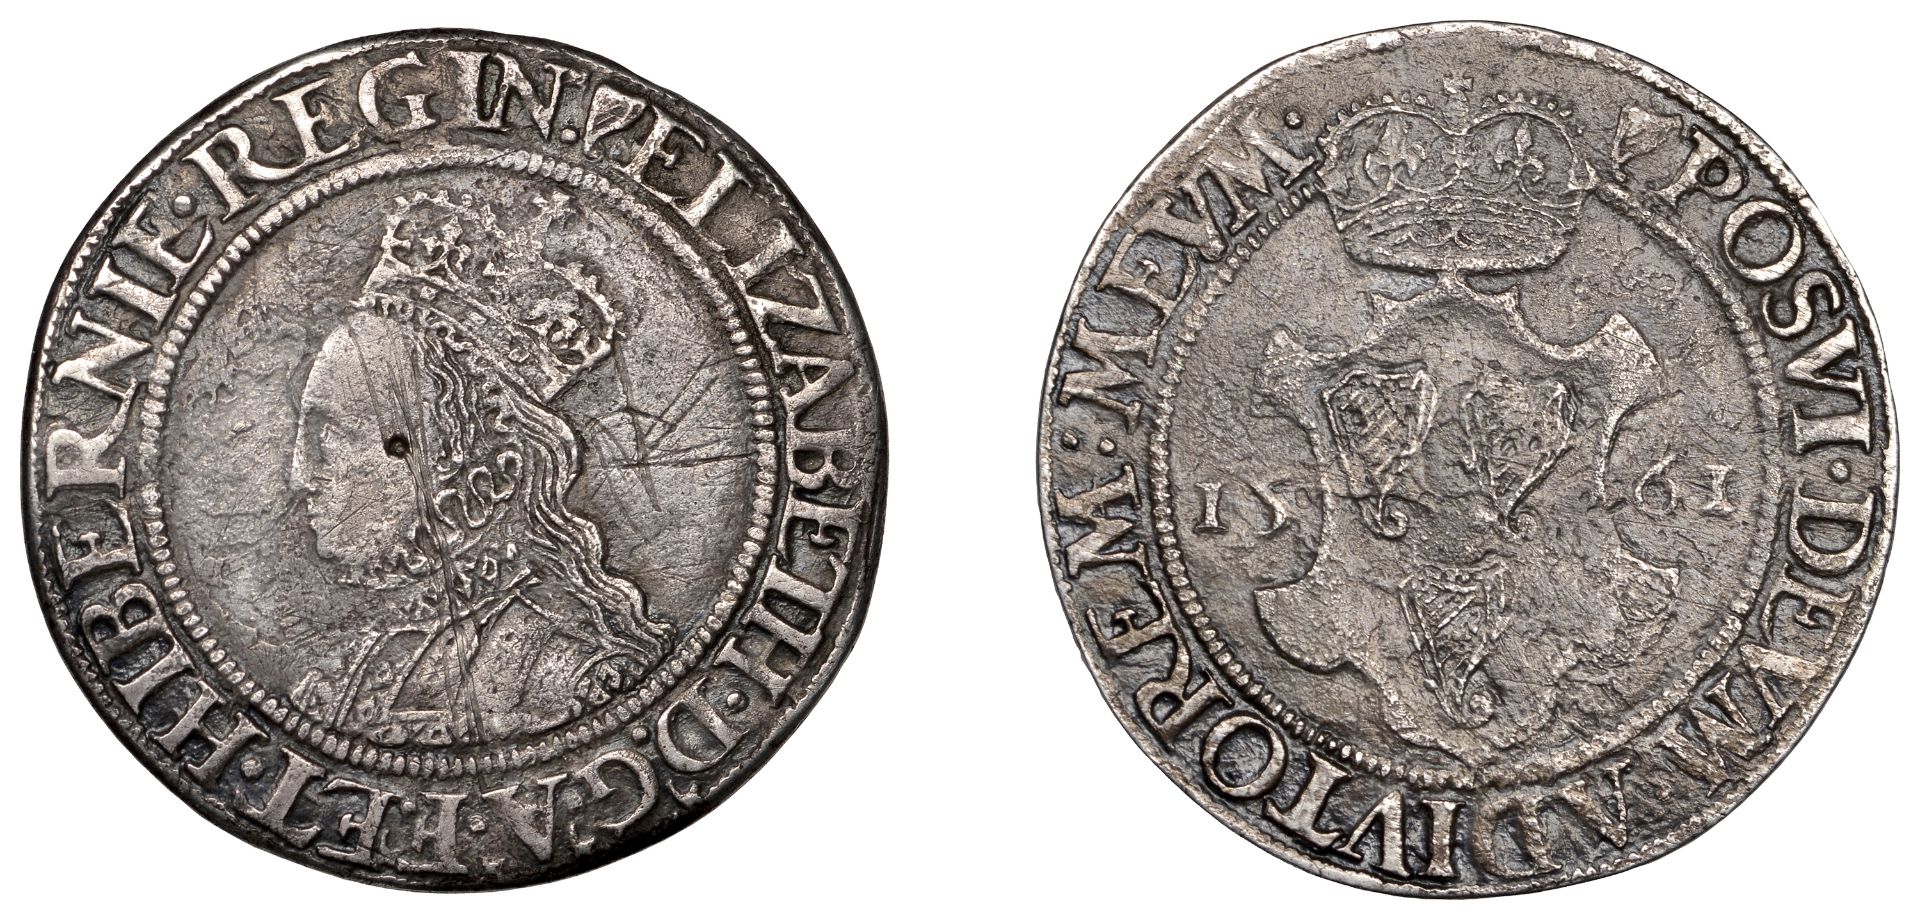 Elizabeth I (1558-1603), Second issue, Shilling, 1561, mm. harp, reads regin, 4.26g/9h (S 65...